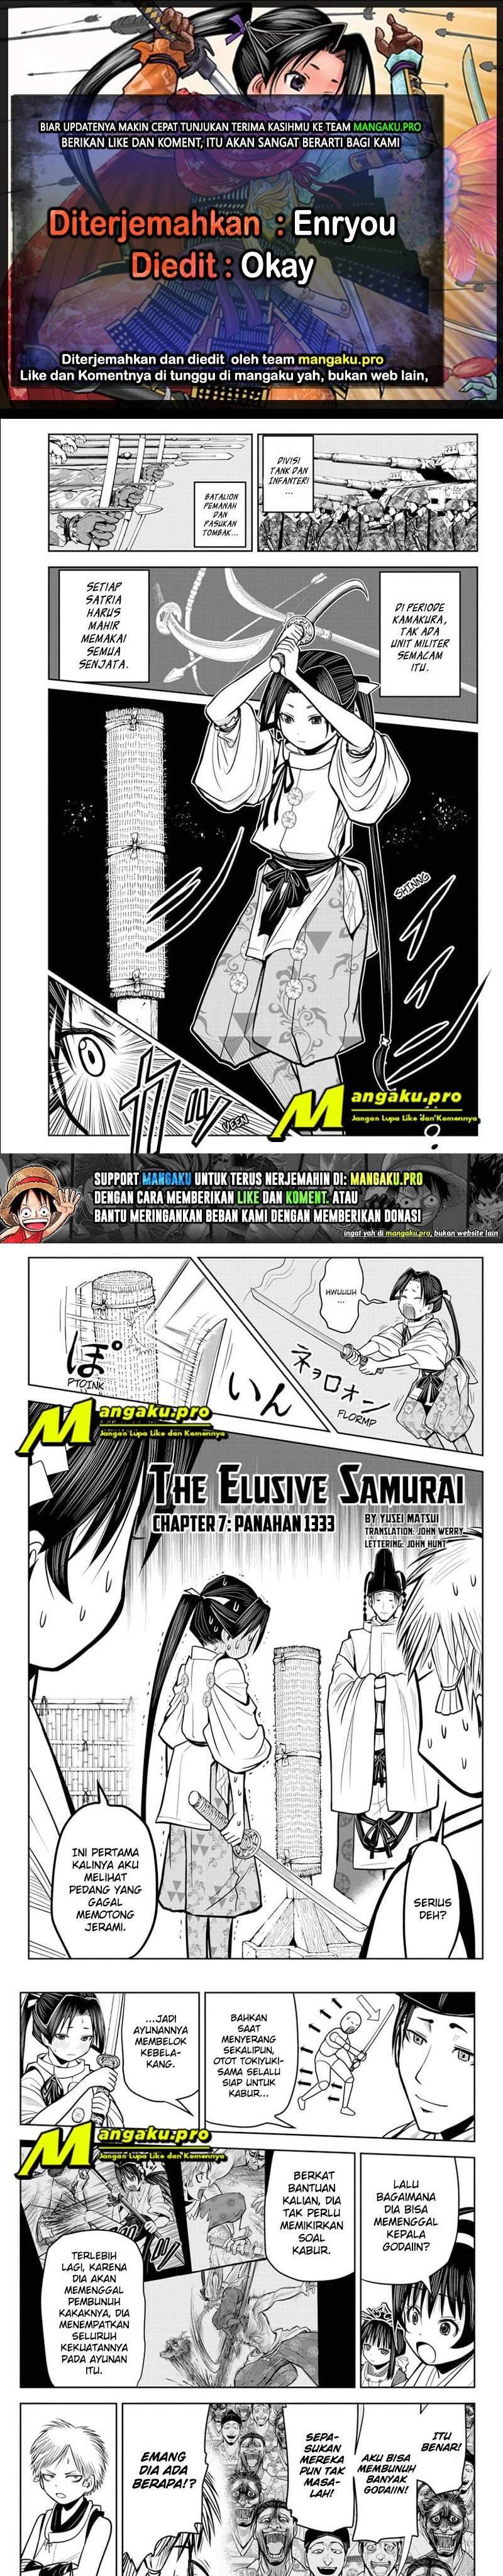 The Elusive Samurai Chapter 7 1